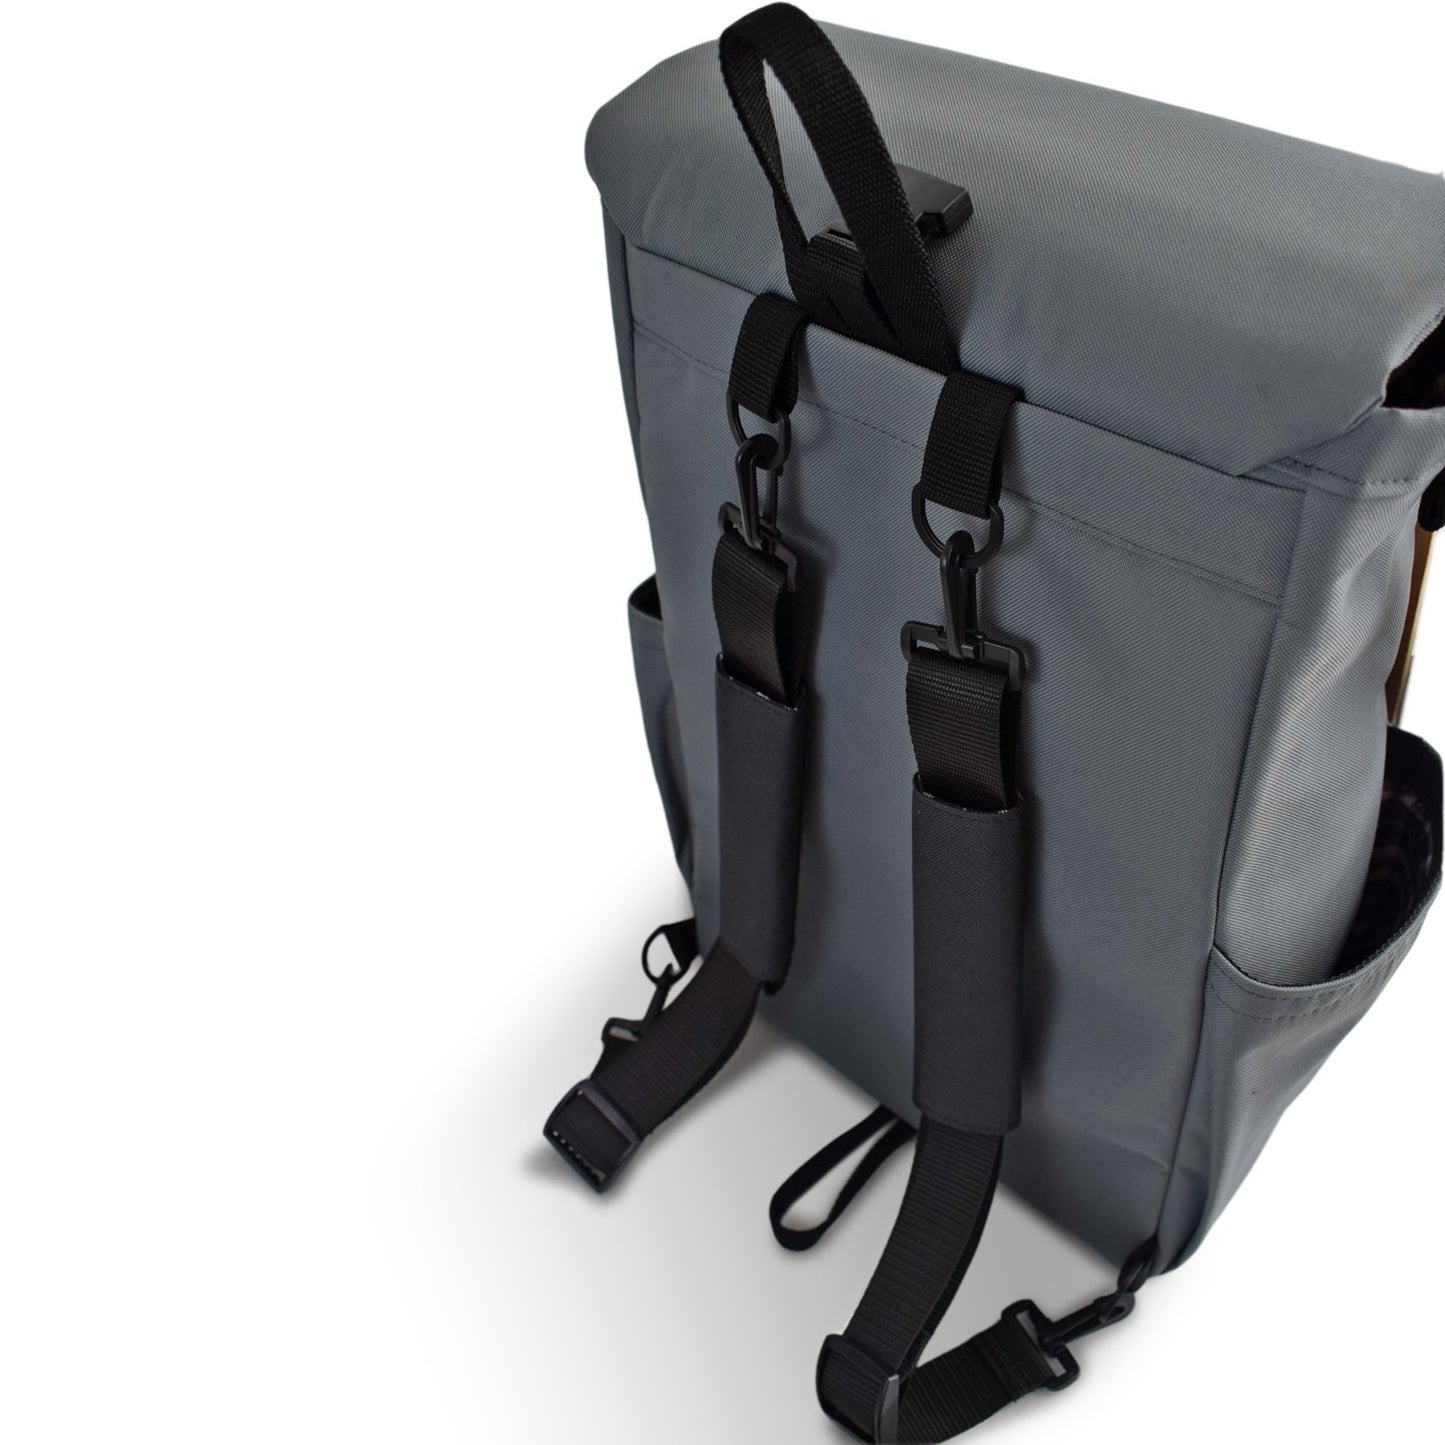 Woodsack laptop backpack in grey color made by Goodstart Jones 